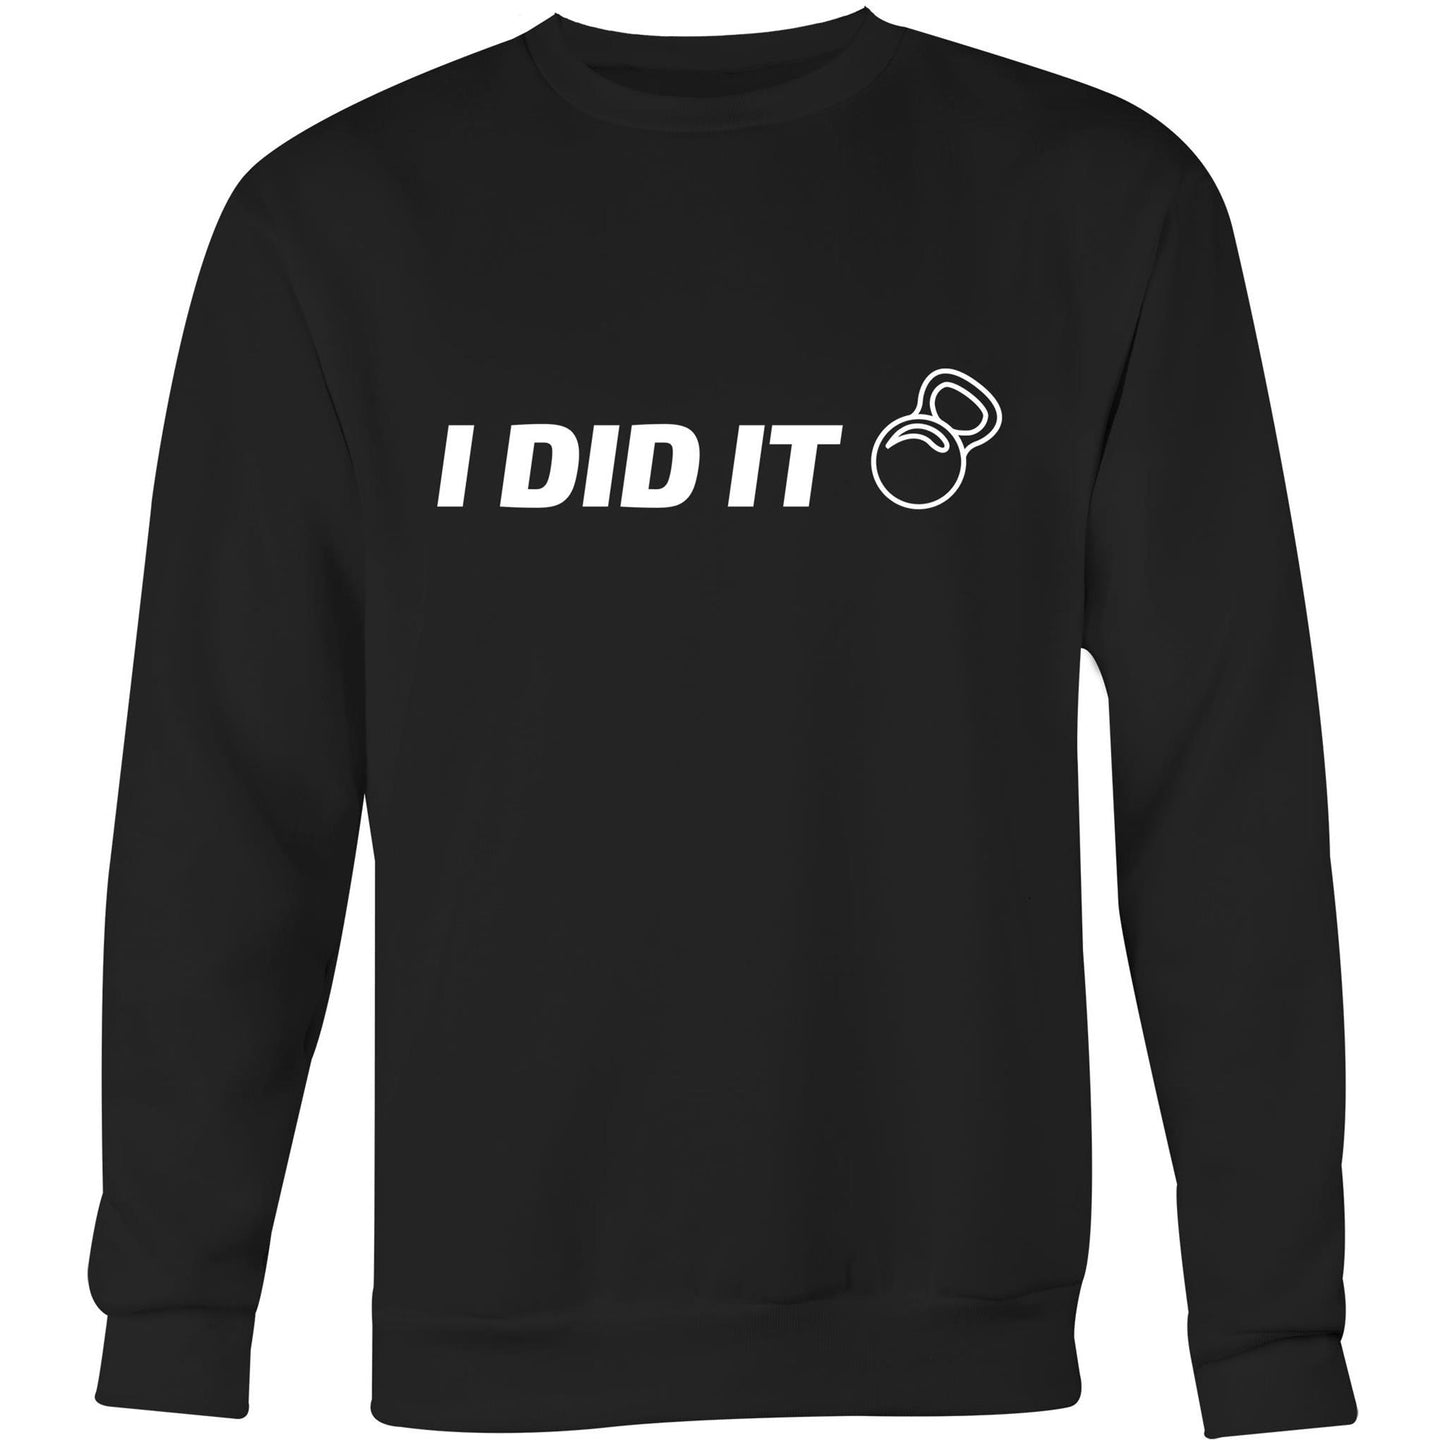 I Did It - Crew Sweatshirt Black Sweatshirt Mens Womens